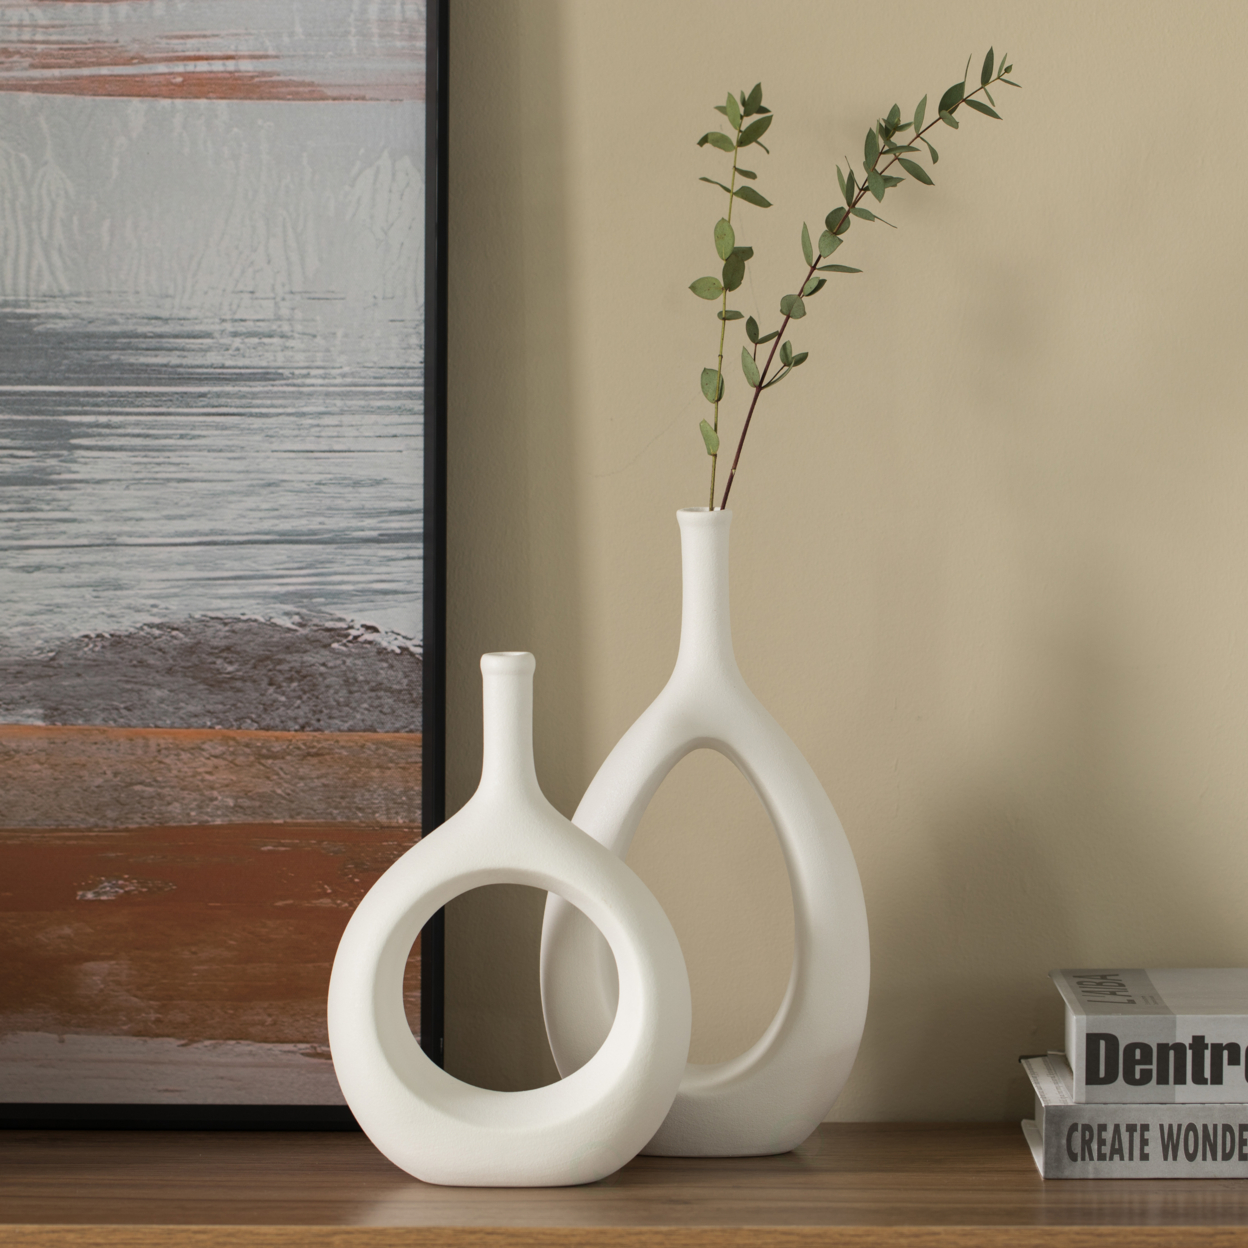 Contemporary White Ceramic Unique Shaped Flower Table Vase Centerpiece - Small